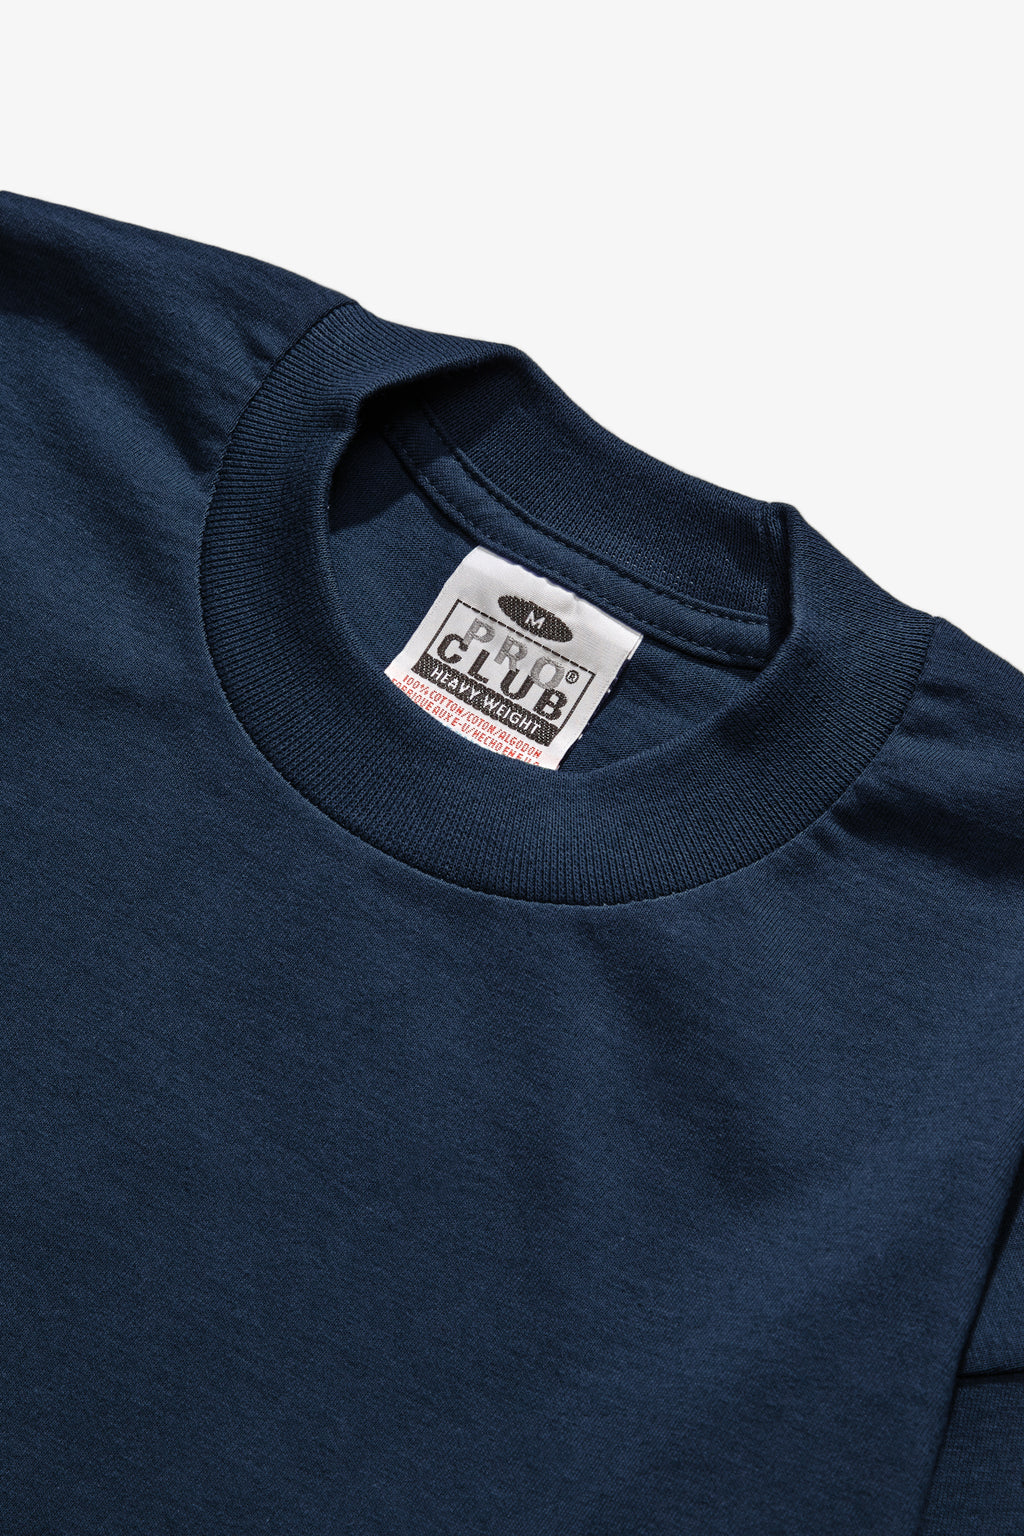 Pro Club - Heavyweight Long Sleeve T-Shirt - Navy | Blacksmith Store